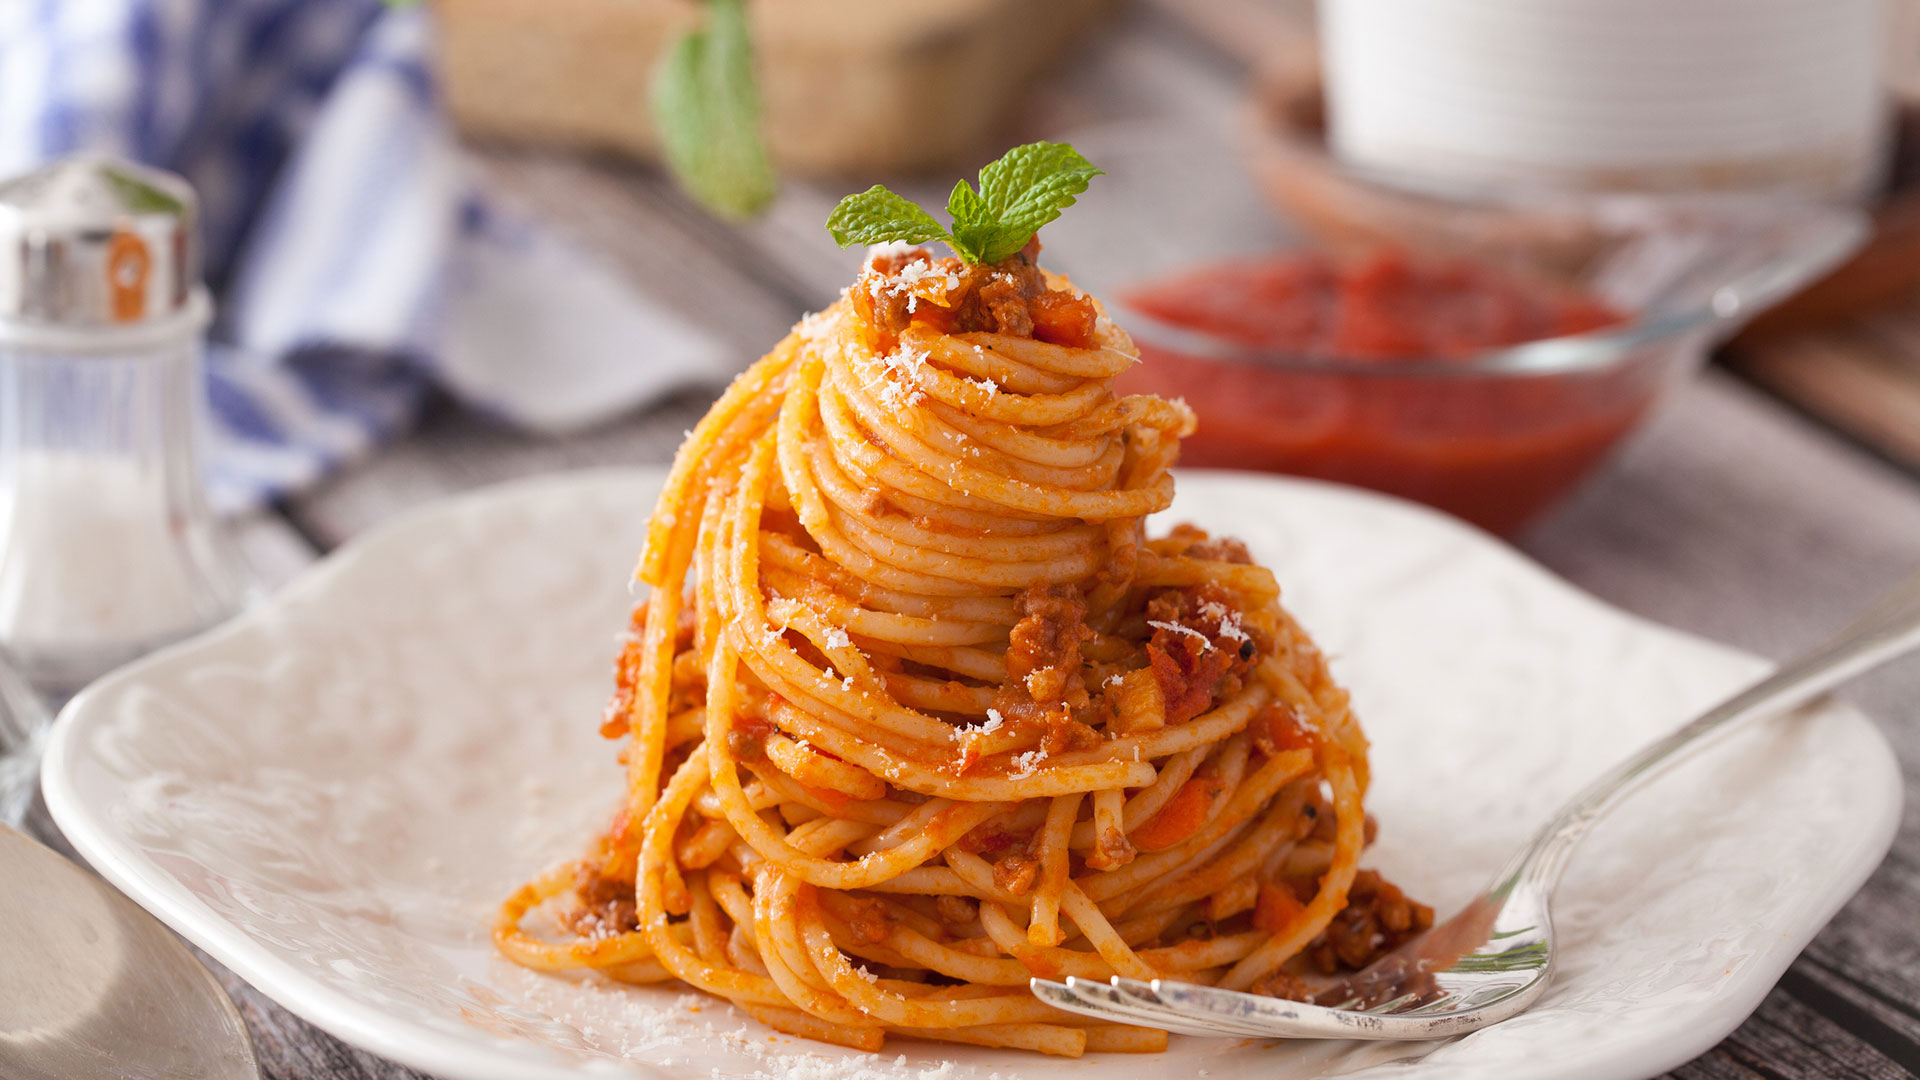 Los espagueti o spaghetti son sinónimo de "hecho en Italia" (Gettyimages)